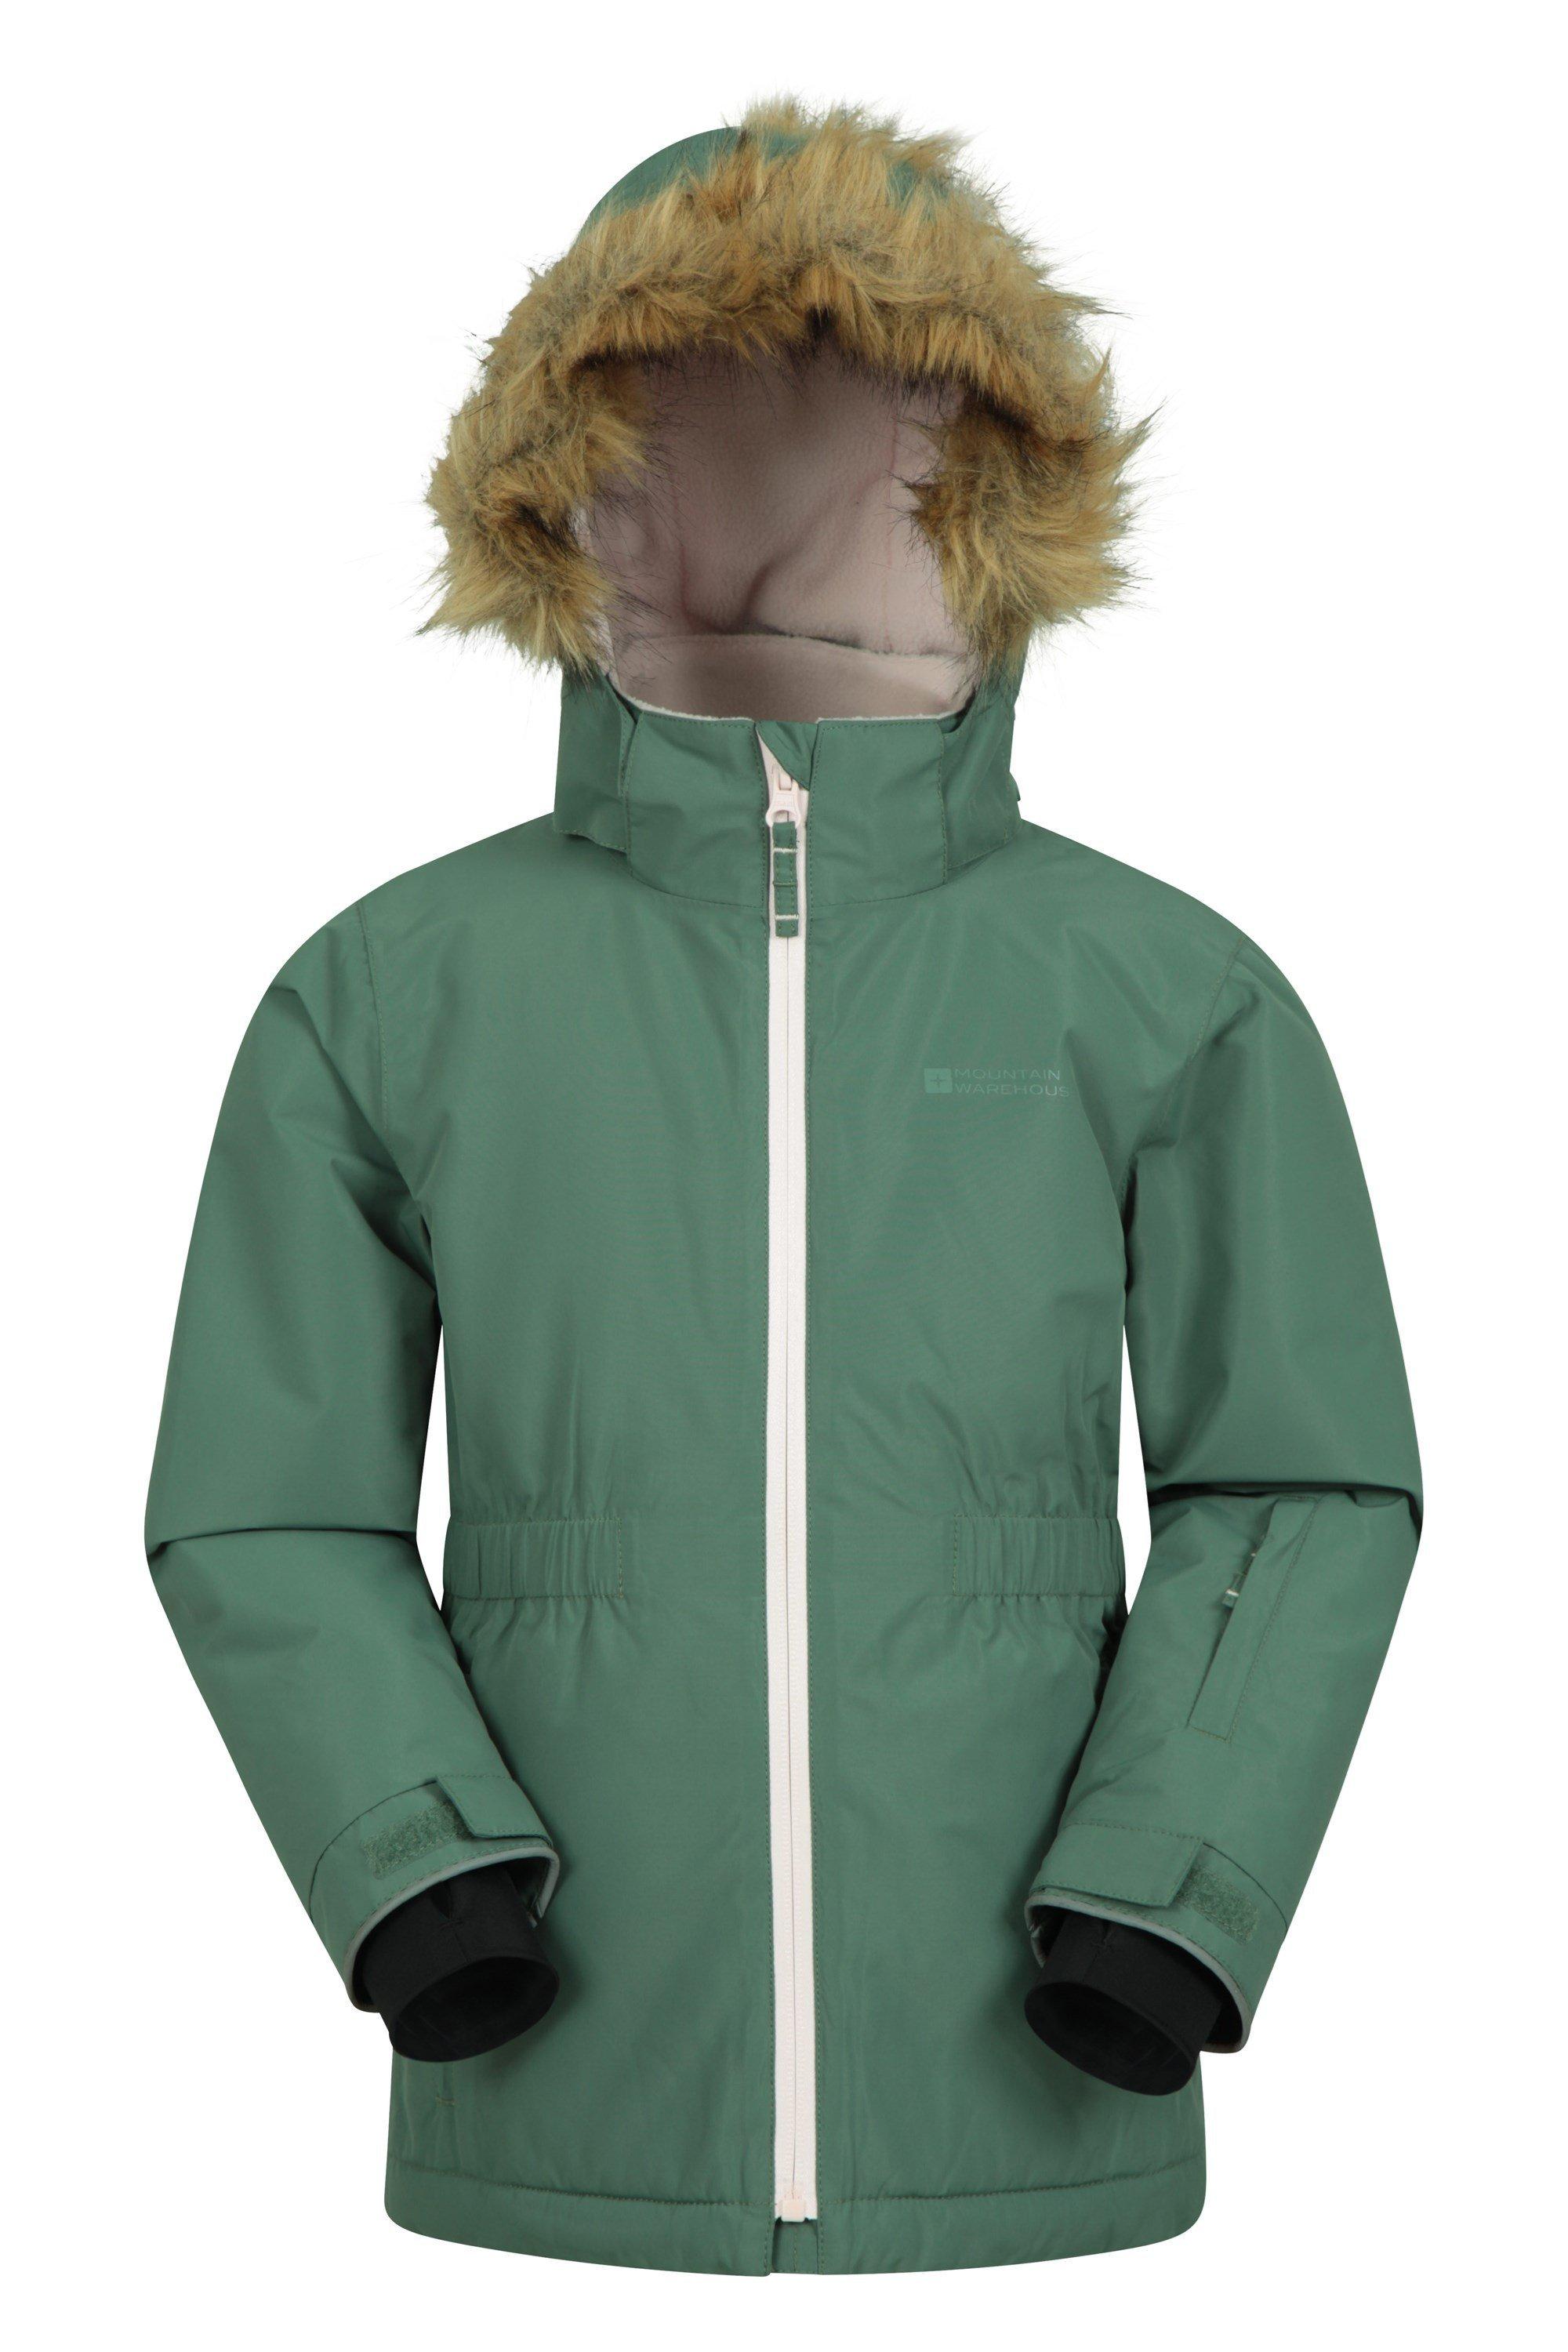 Водонепроницаемая дышащая лыжная куртка Freeze Parka Mountain Warehouse, хаки